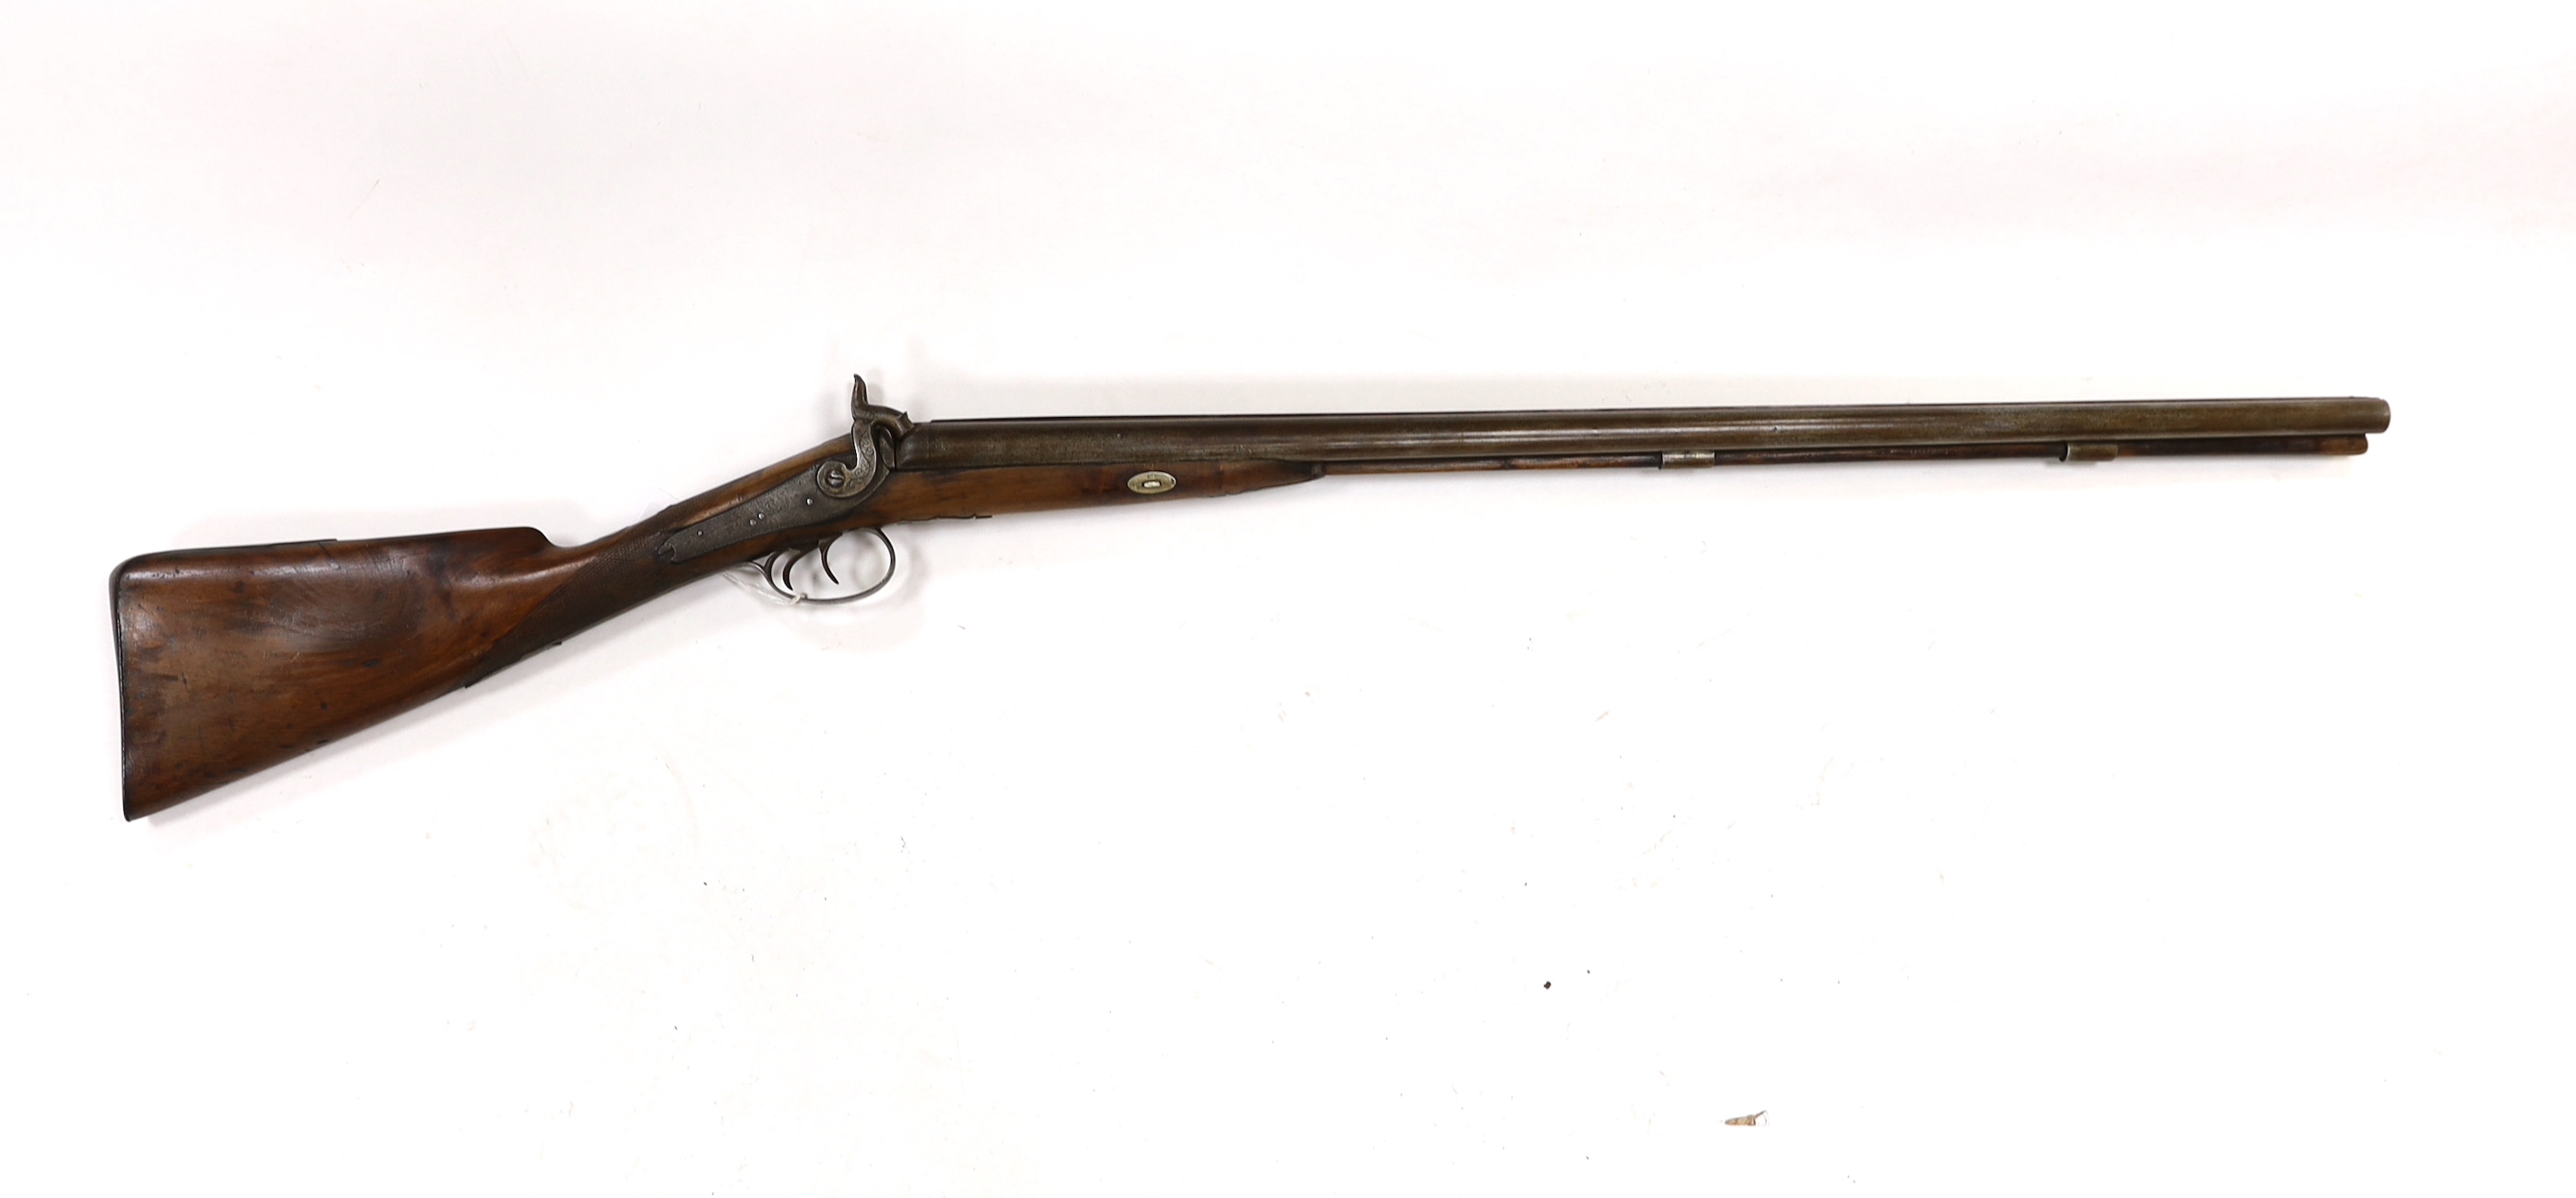 A 14 bore double-barrelled, side-by-side muzzle loading percussion shotgun, back action locks, circa 1850, barrel 77.5cm